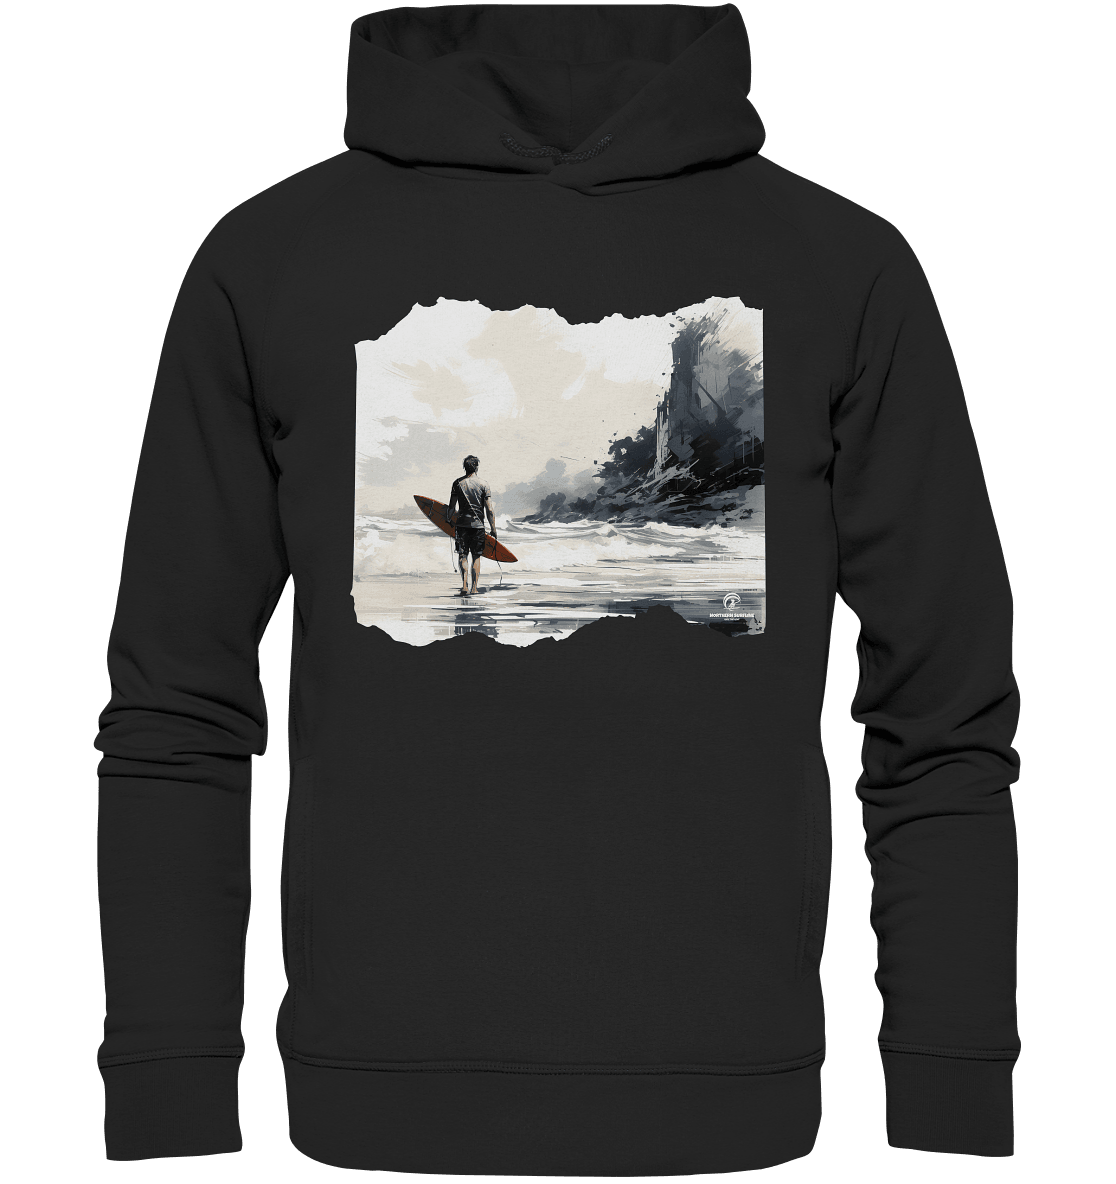 Northern Surfline - Organic Fashion Hoodie - Snapshirts